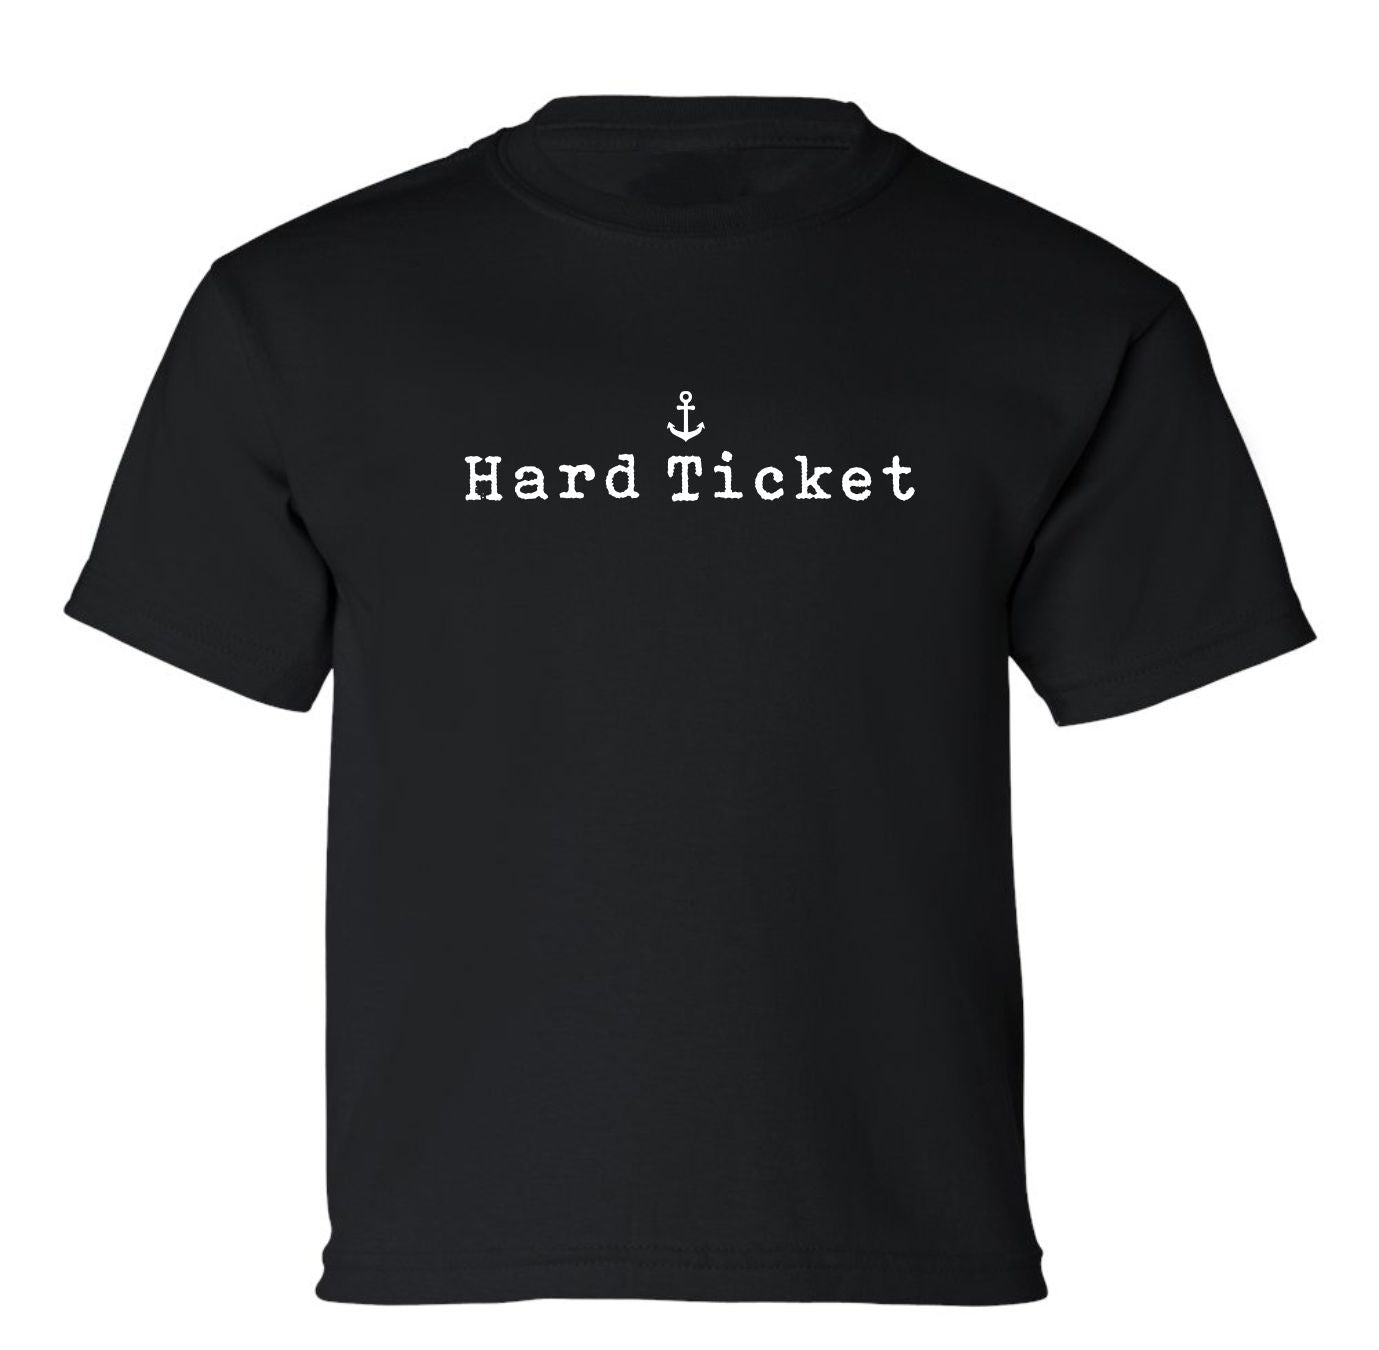 "Hard Ticket" Toddler/Youth T-Shirt